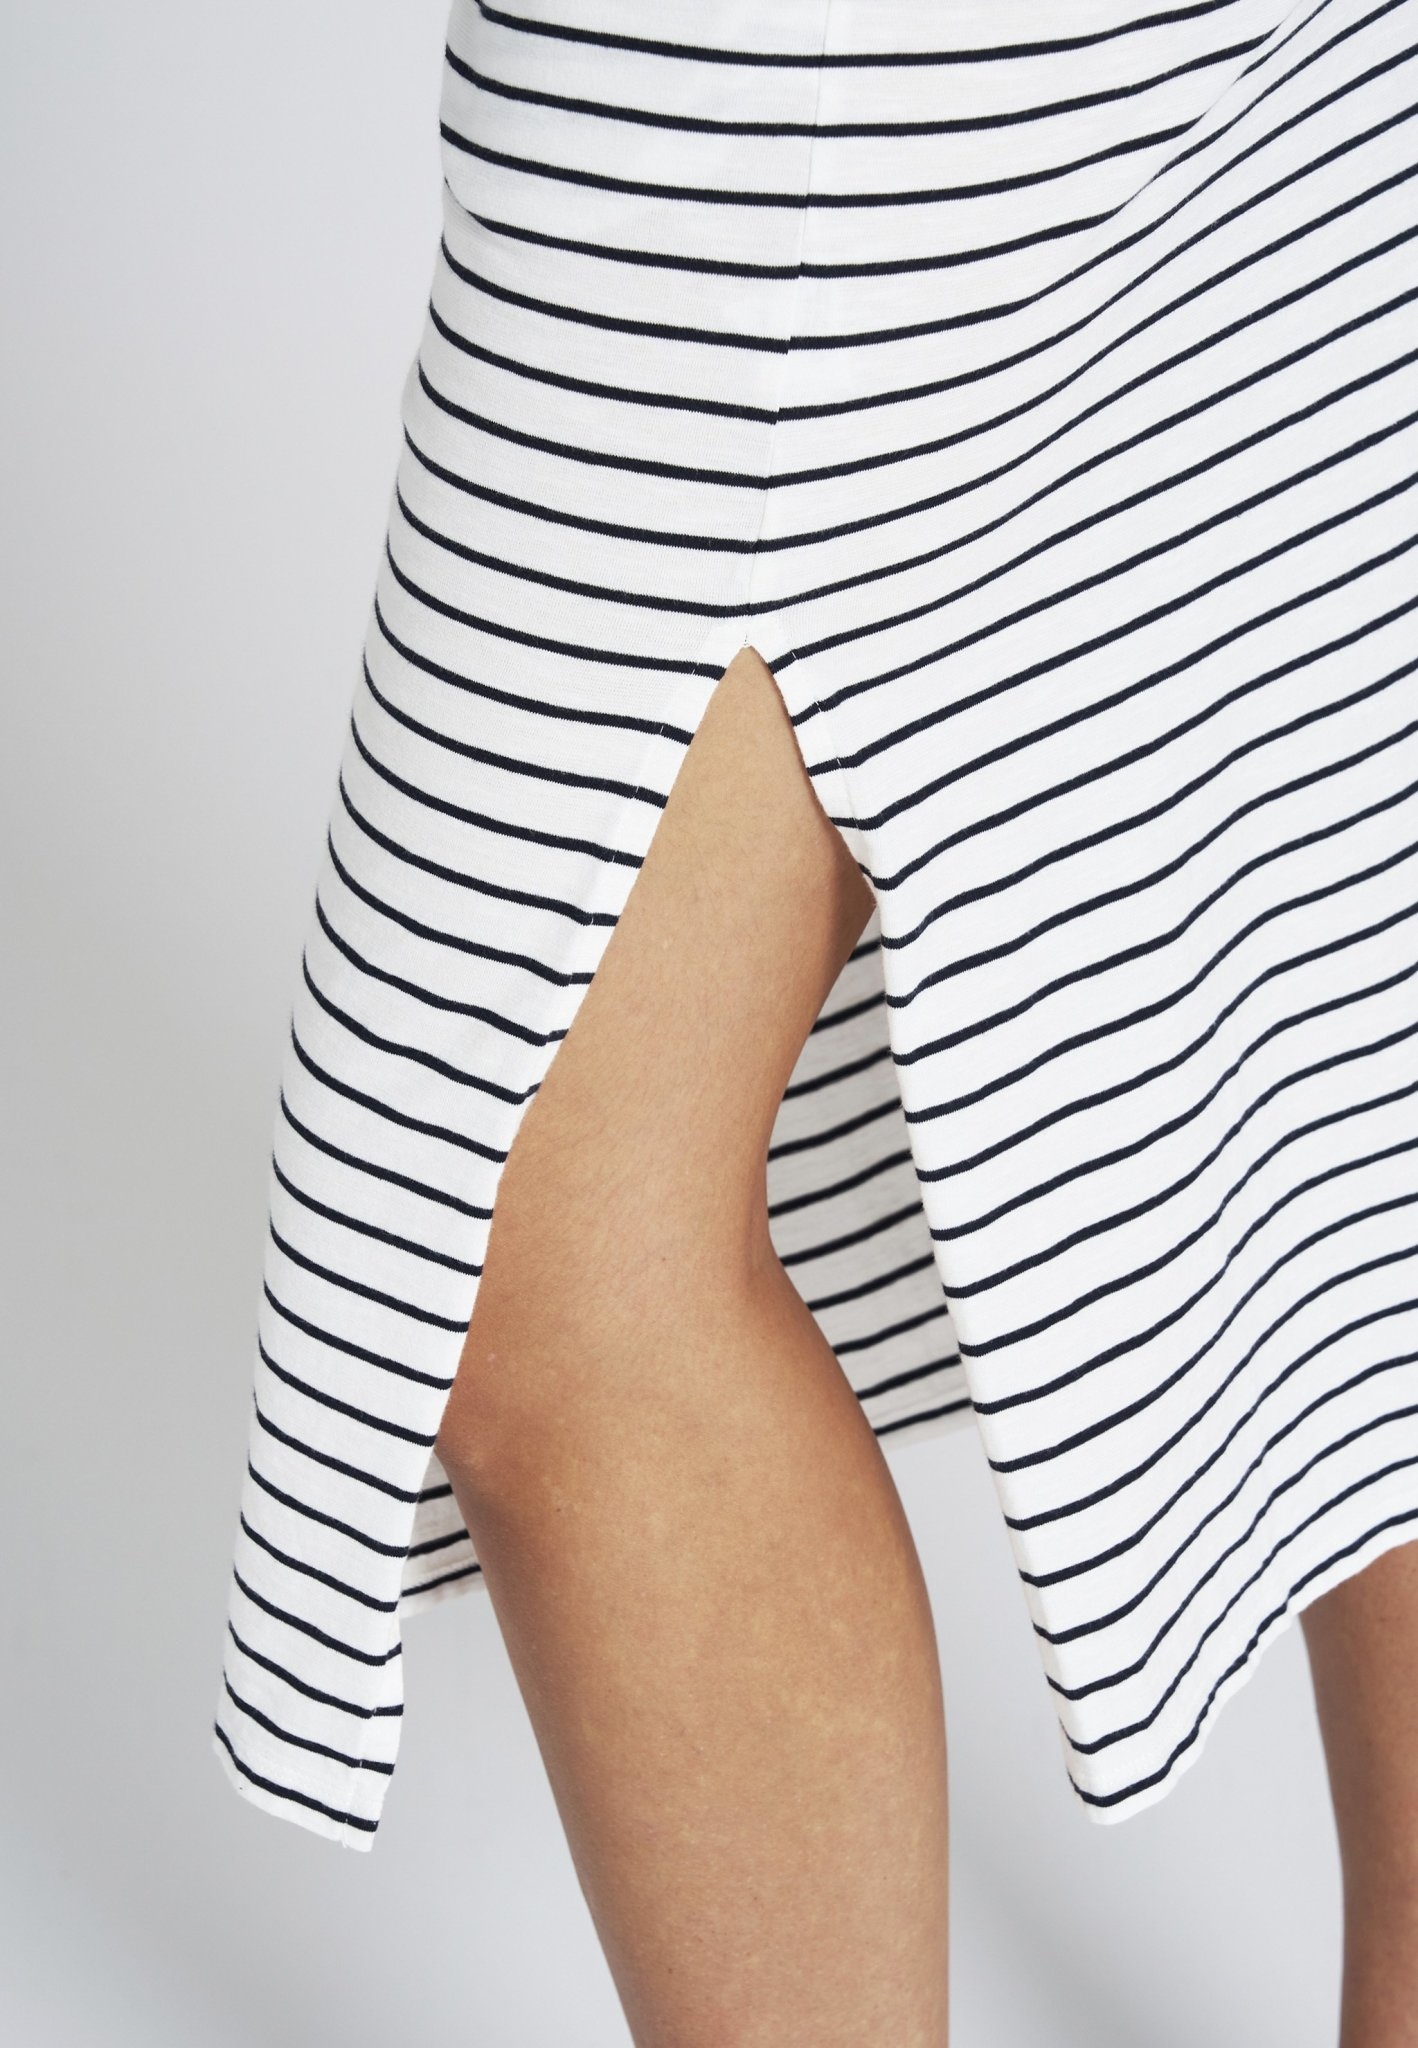 Recolution Recolution,Midi skirt Stripes, navy/ white, S